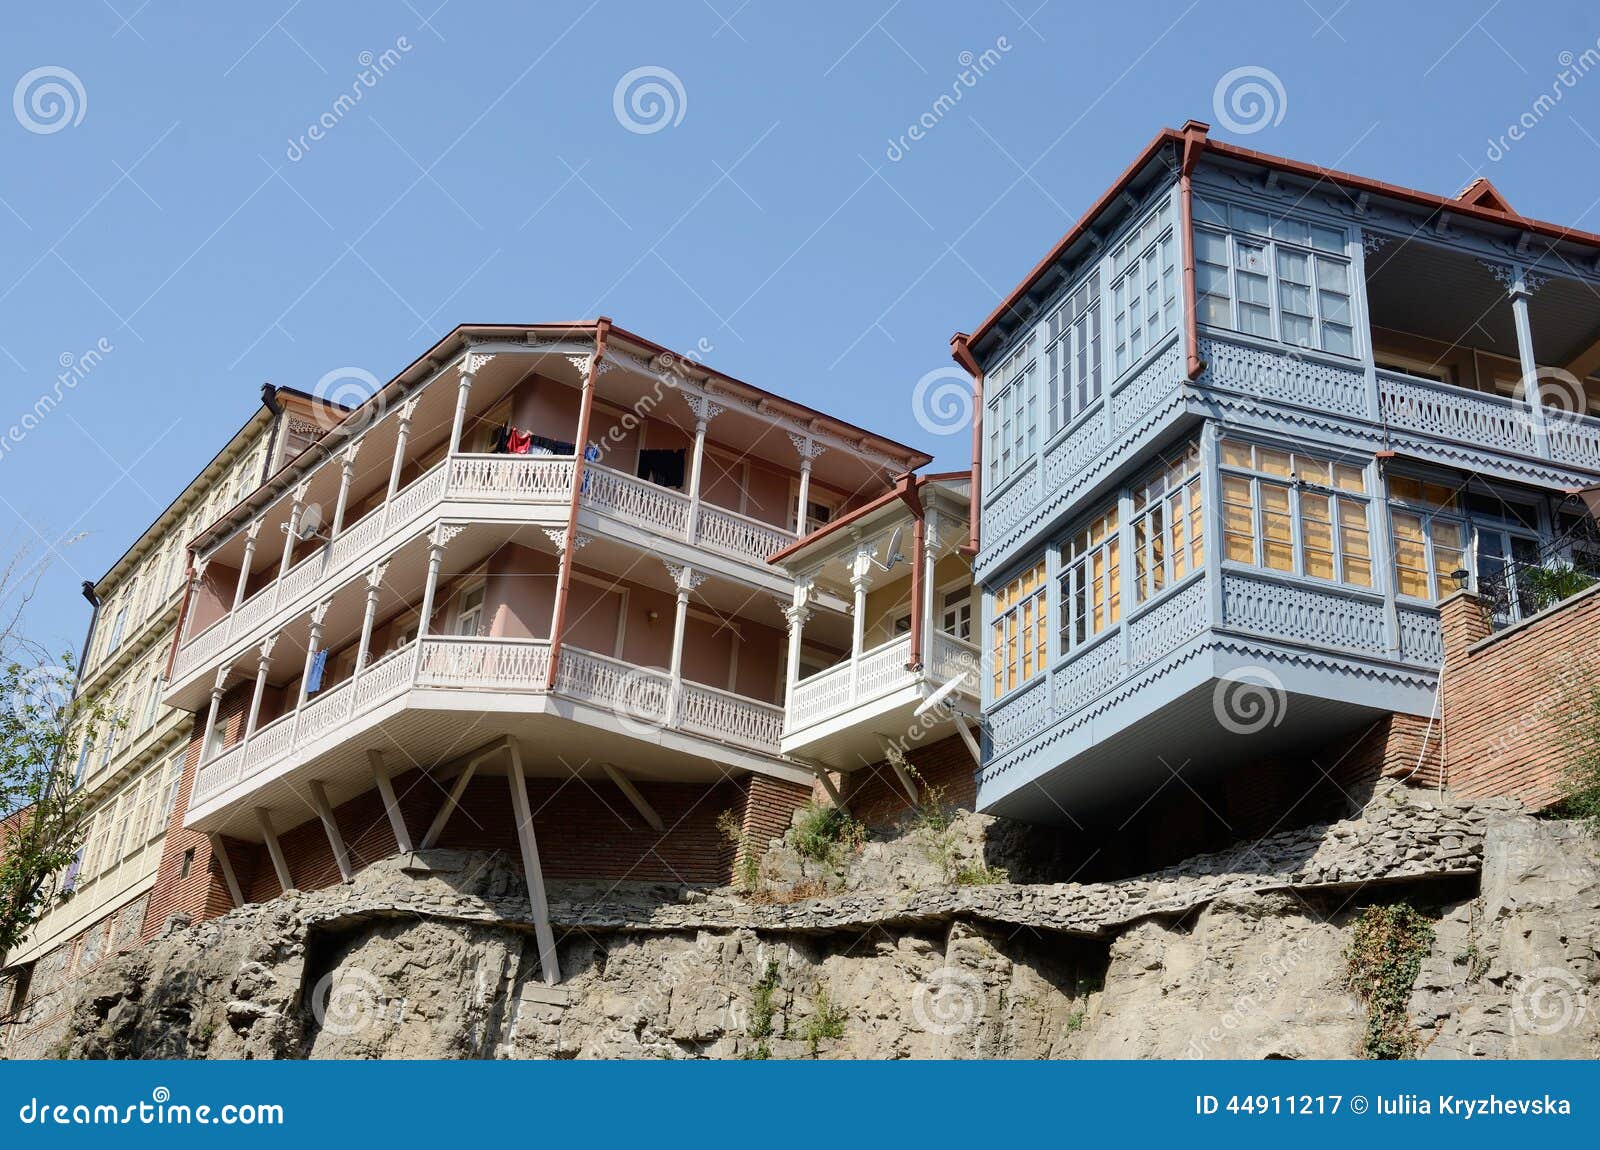 traditional-georgian-architecture-abanot